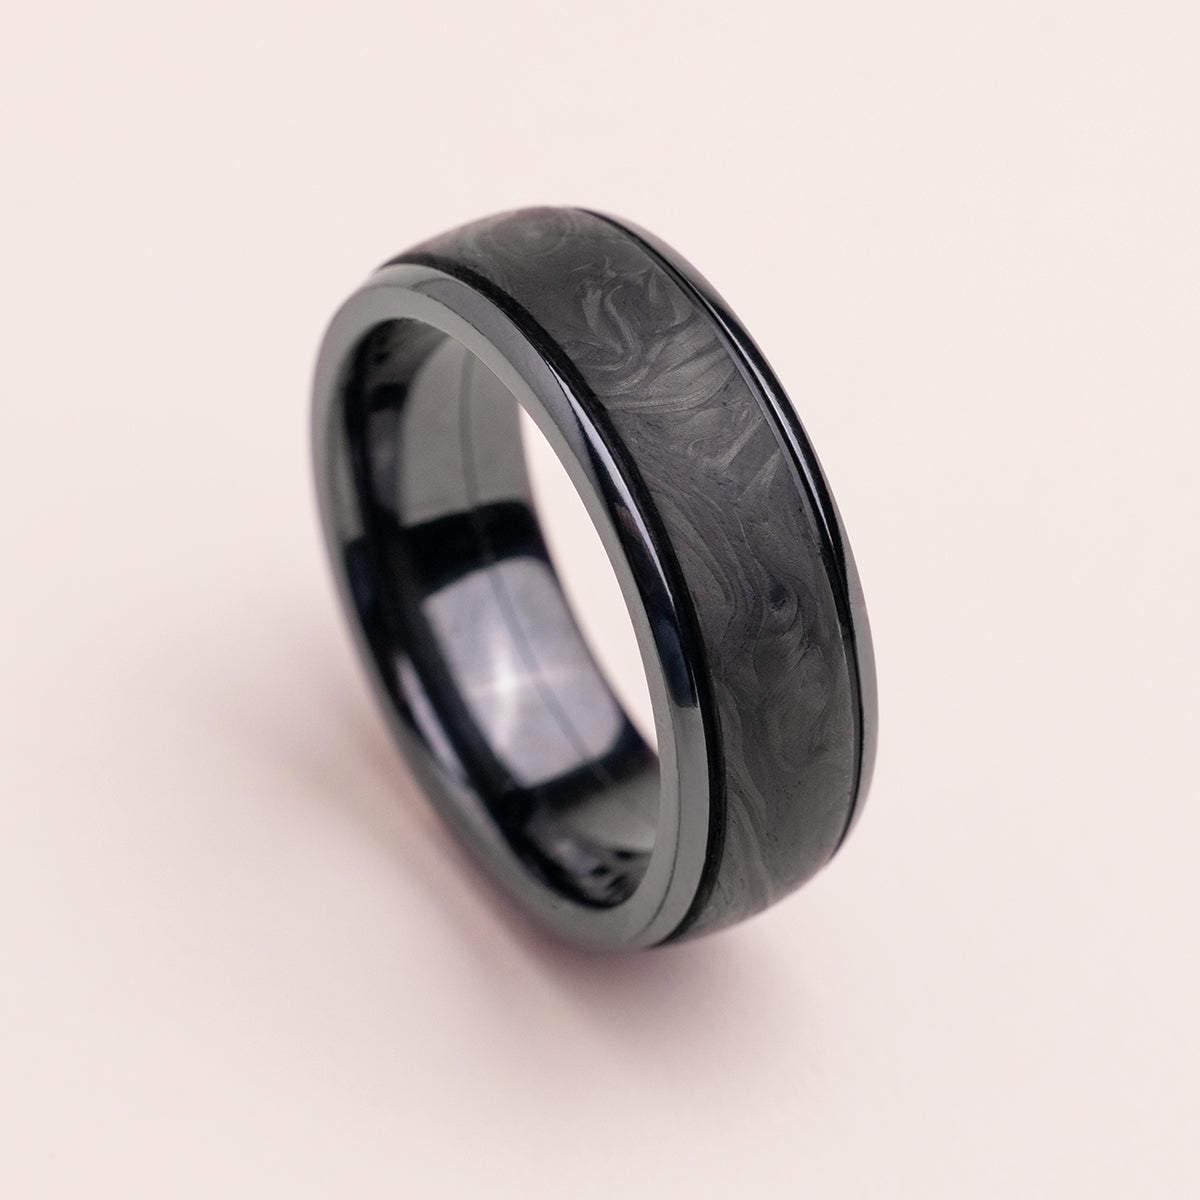 Zirconium and Silver Men's 6mm 0.50ct Black Diamond Ring